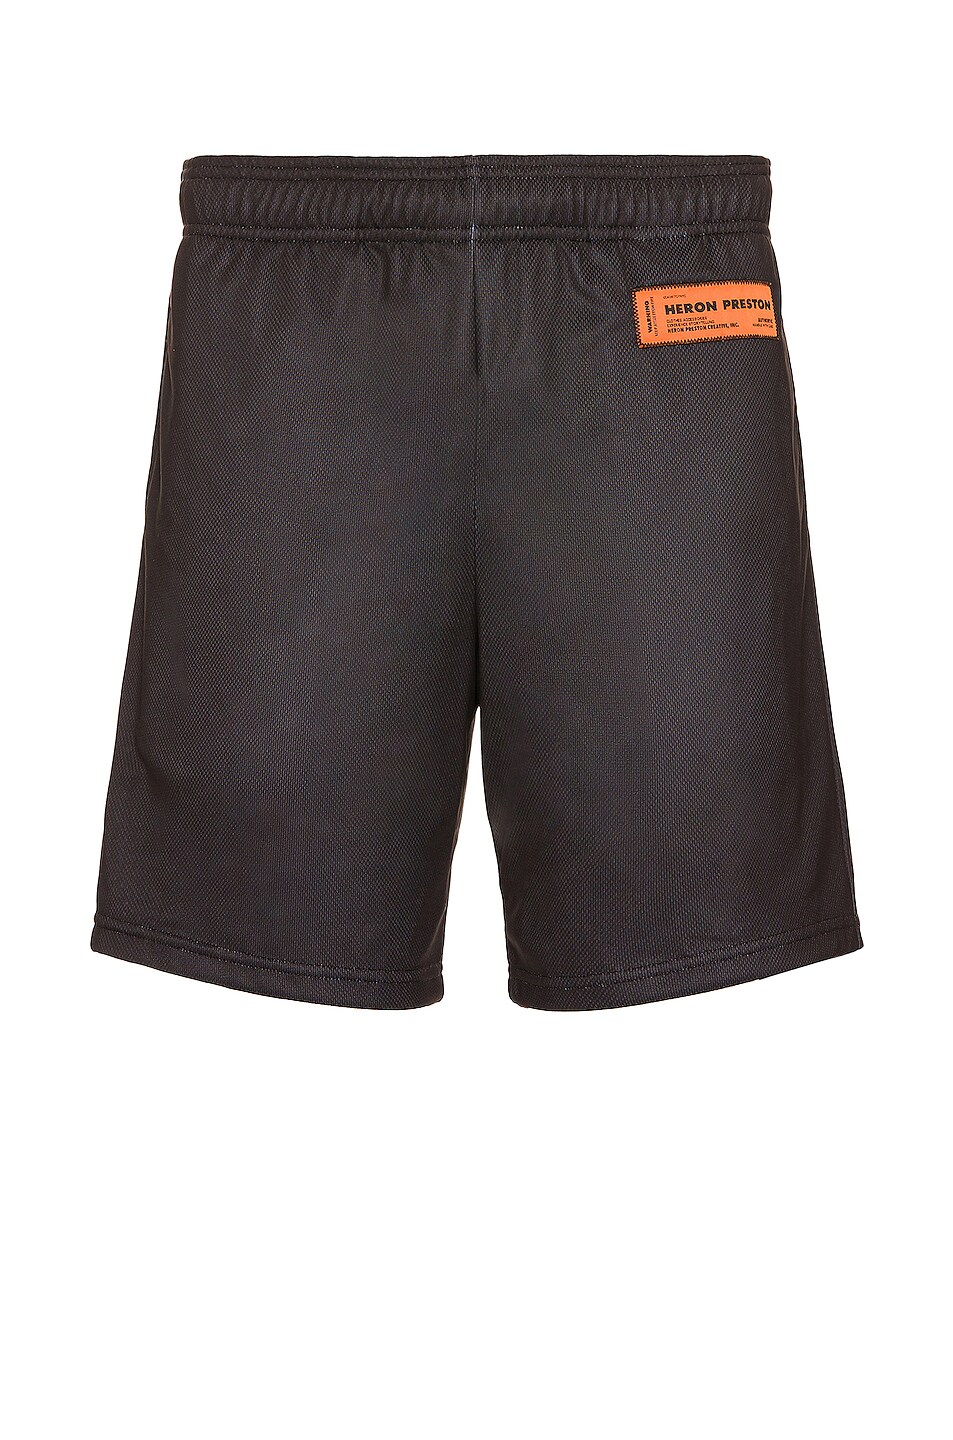 Image 1 of Heron Preston Dry Fit Shorts in Black